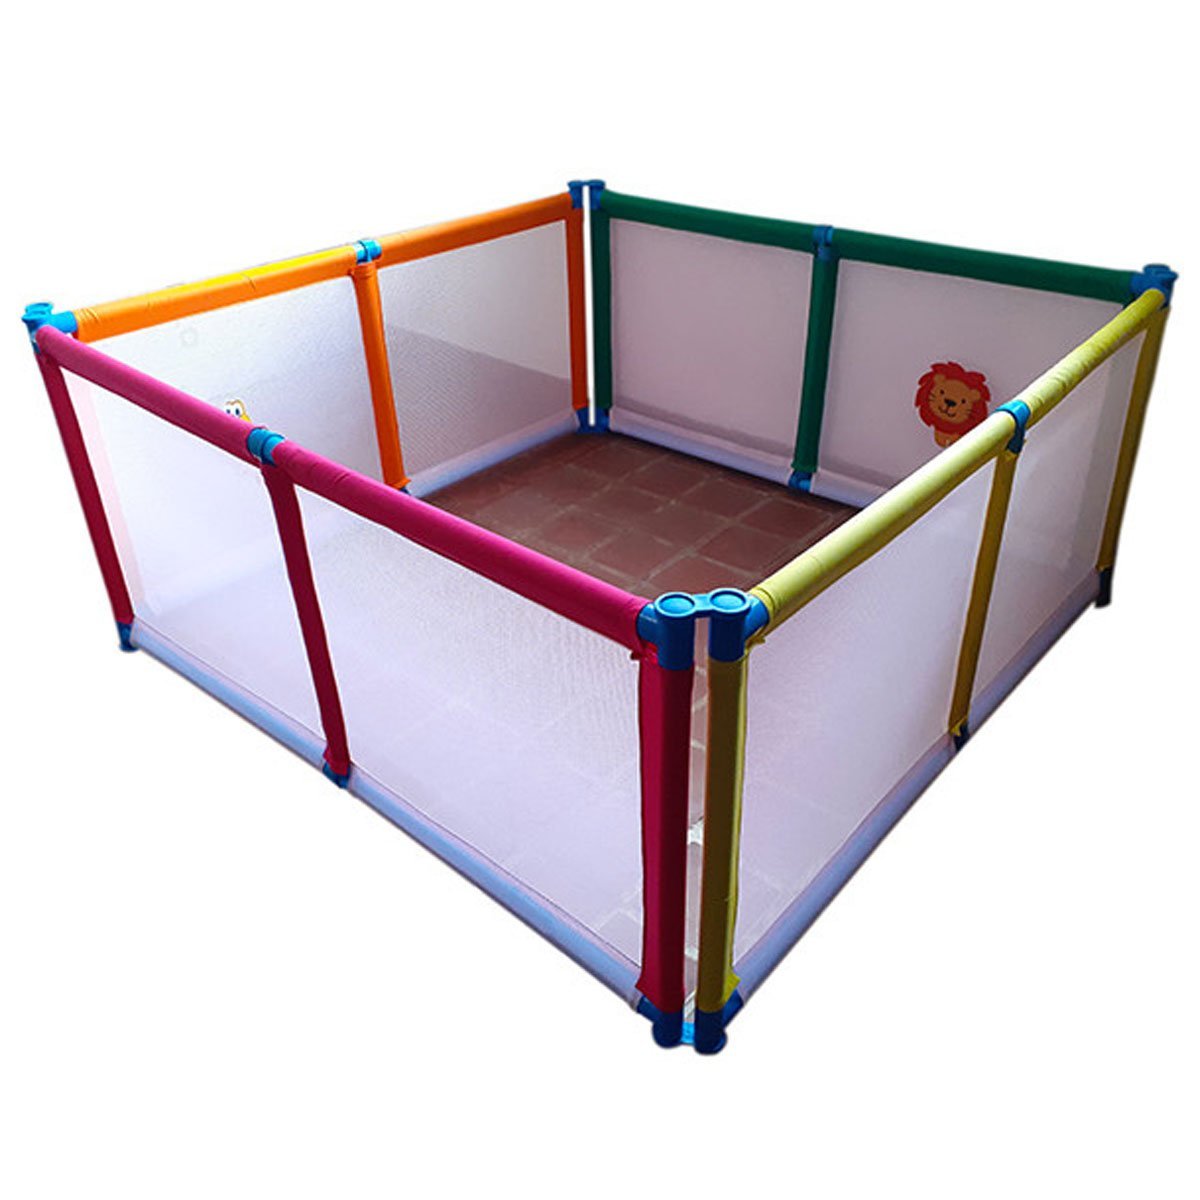 4 Panel Playpen (Large) - Nesh Kids Store